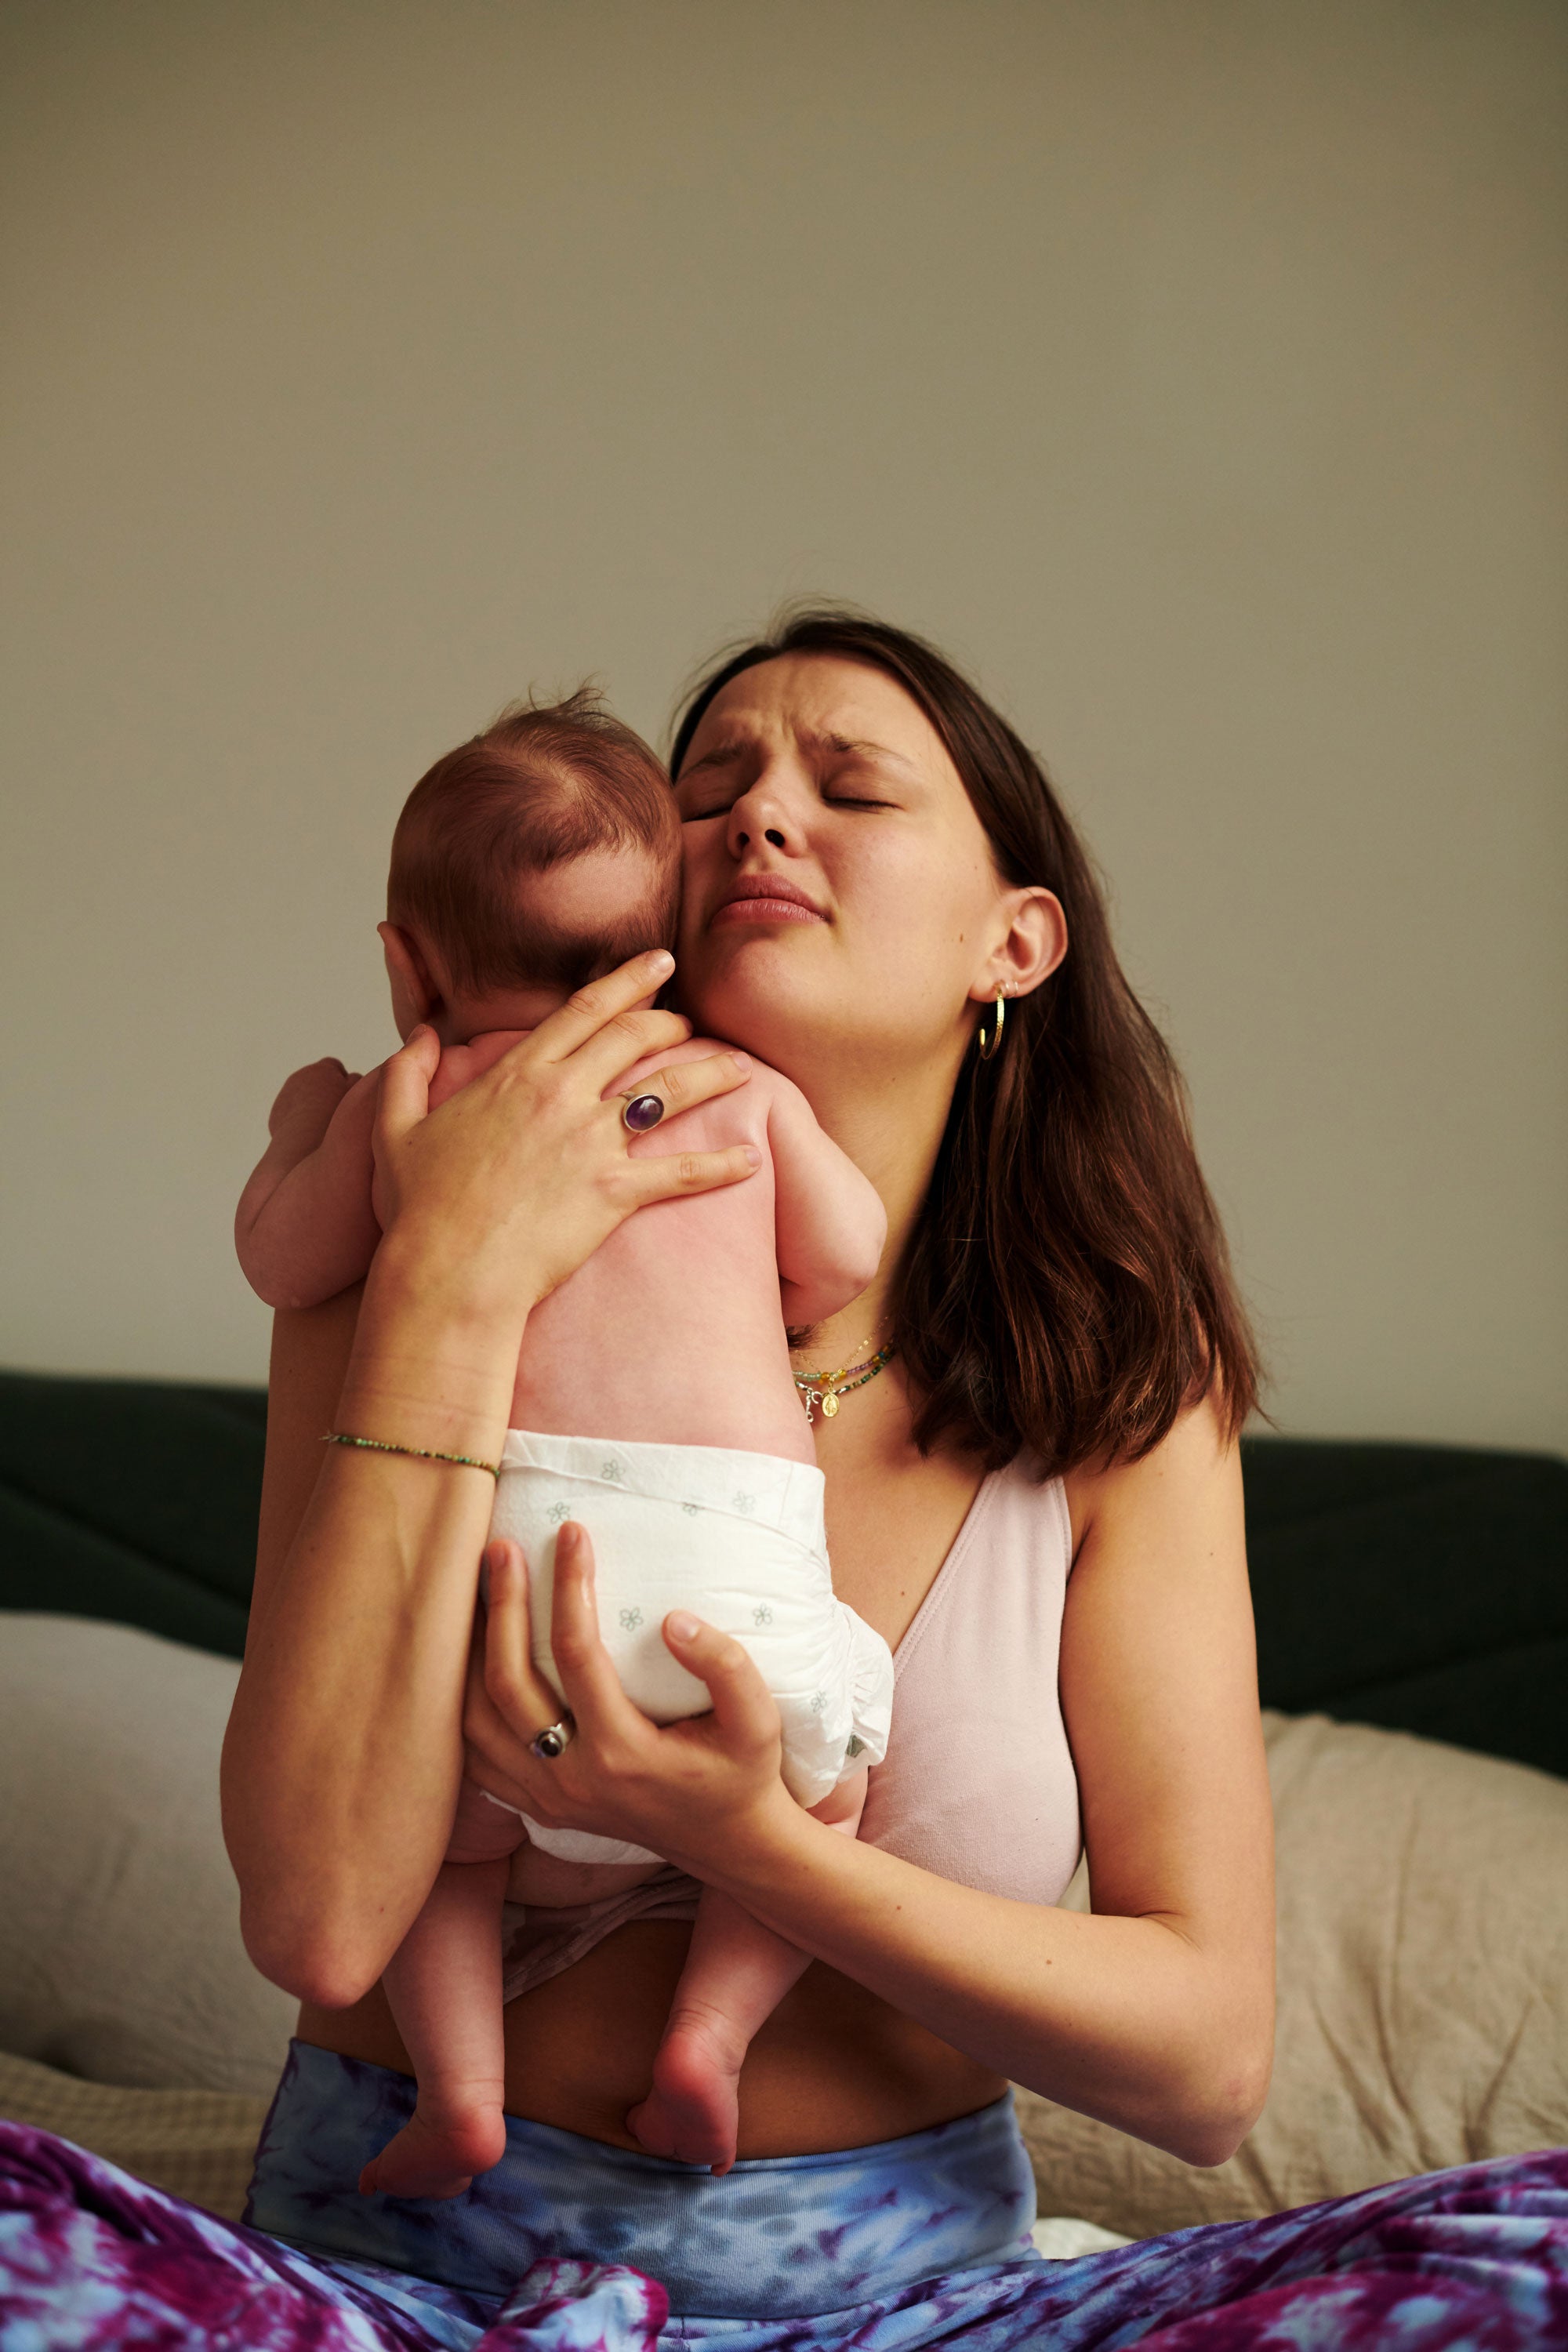 Lactating Black Mom - The Intimate Realities Of Breastfeeding â€“ Photos